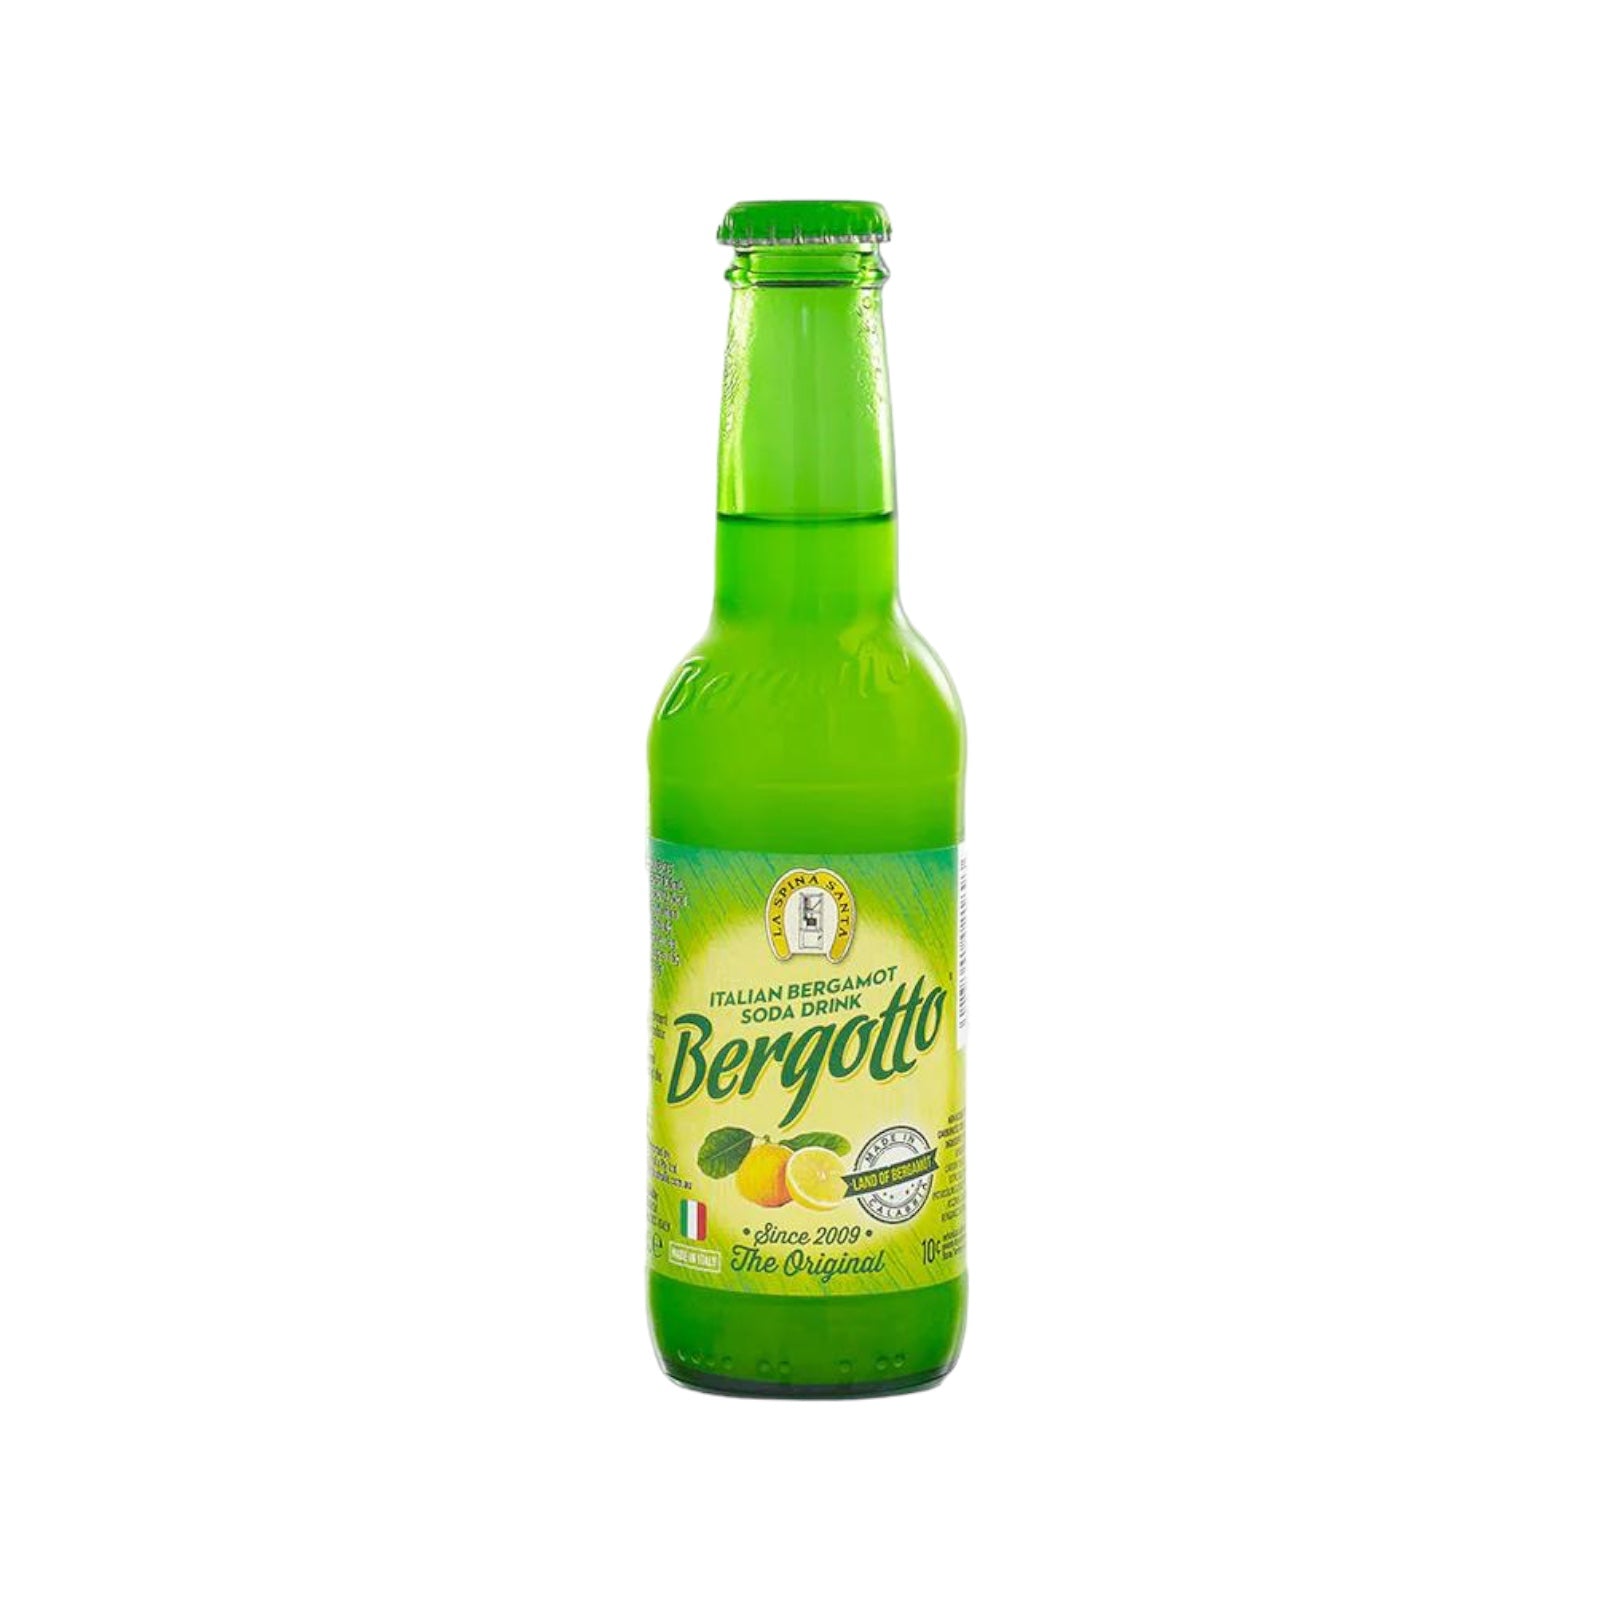 Bergotto Sparkling Drink Italian Soda 20cl